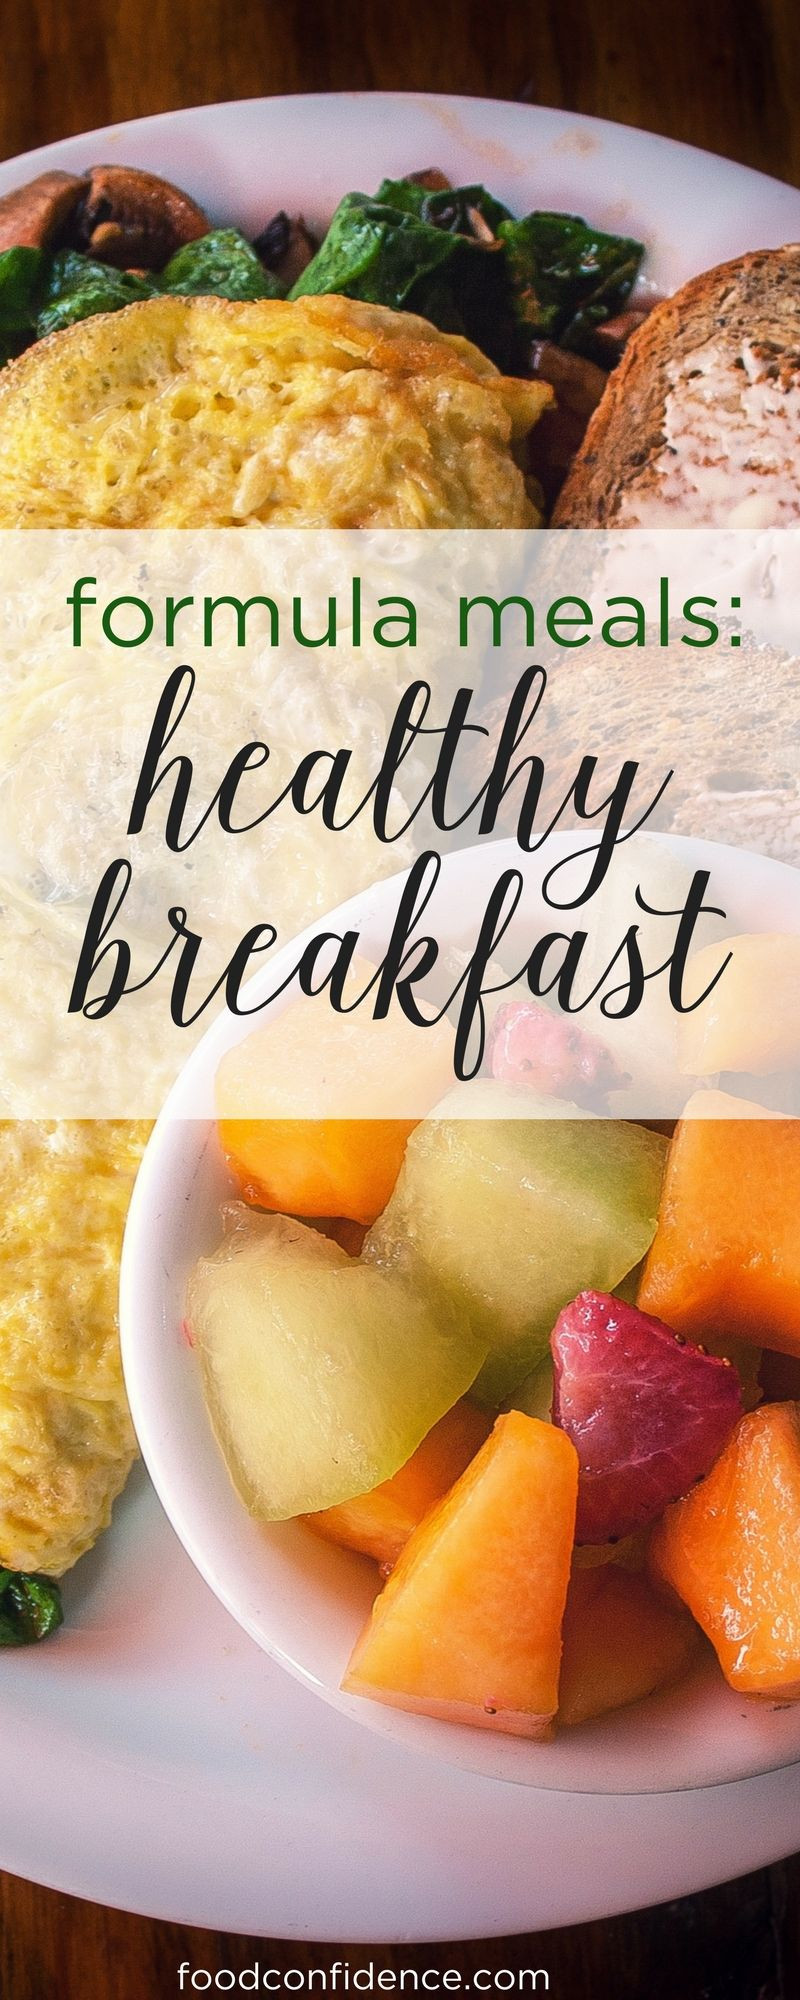 Healthy And Filling Breakfast
 Formula Meals Healthy Breakfast